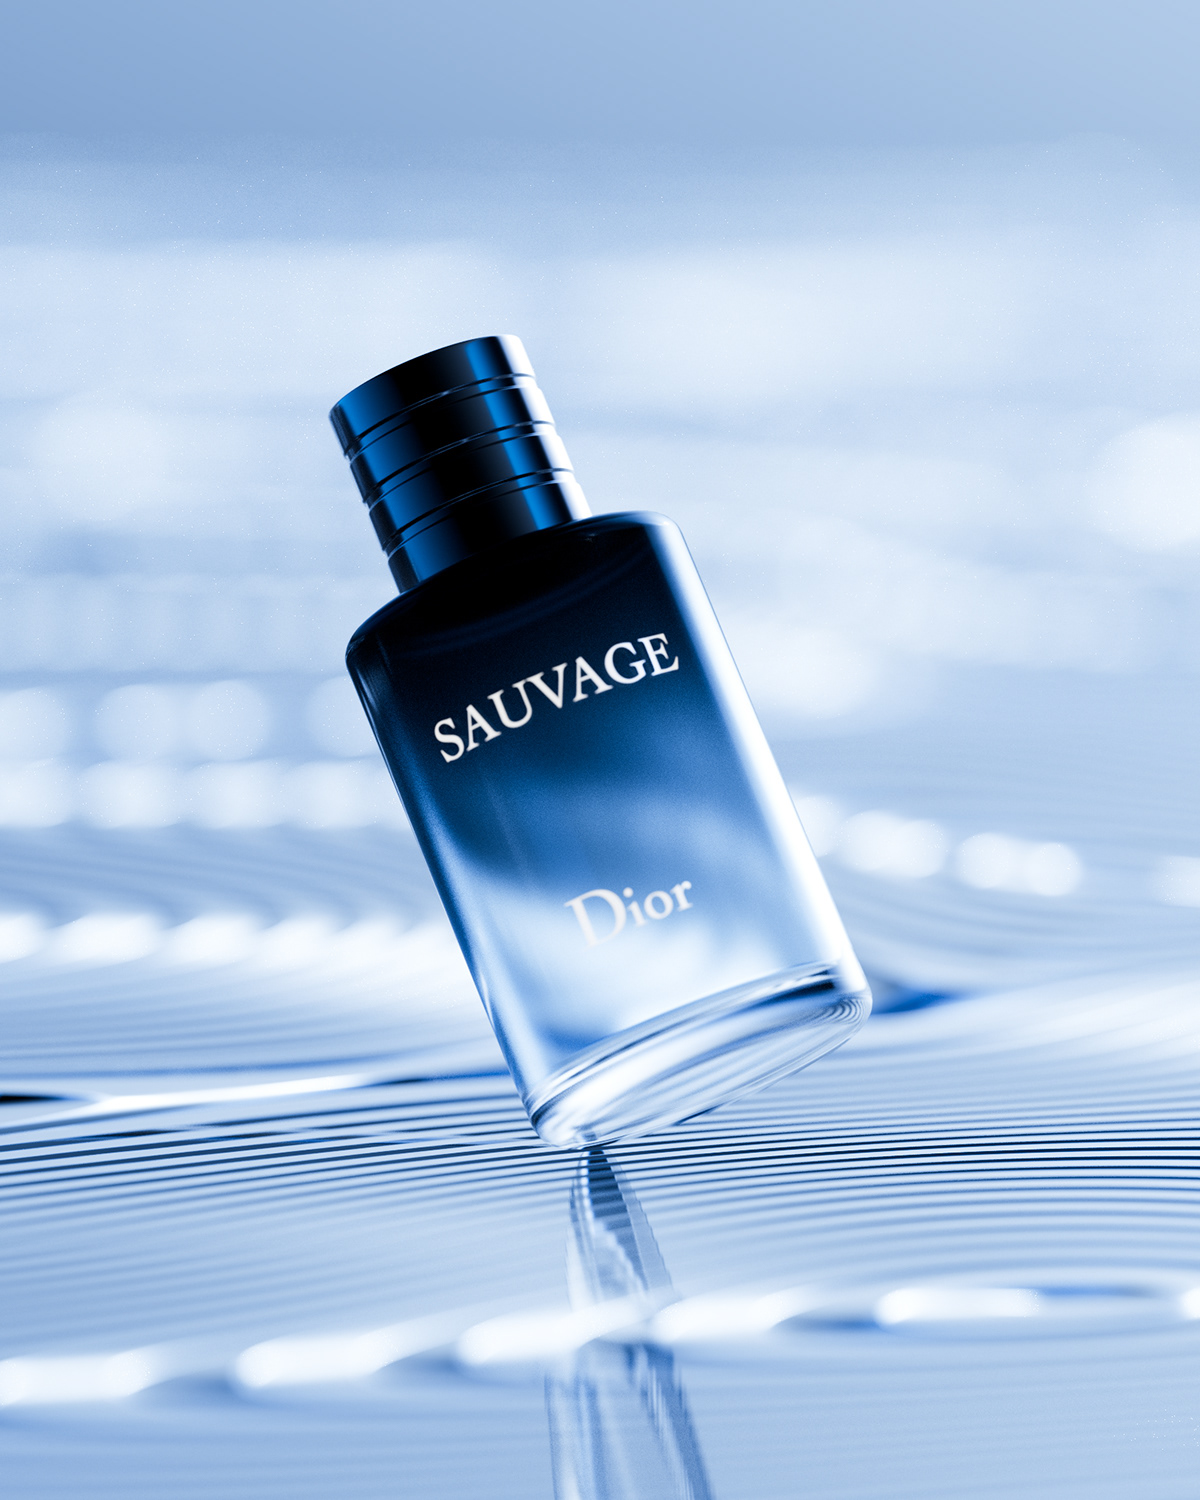 Dior luxury beauty Fragrance eau de parfum perfume Product Photography Advertising  CGI 3d art